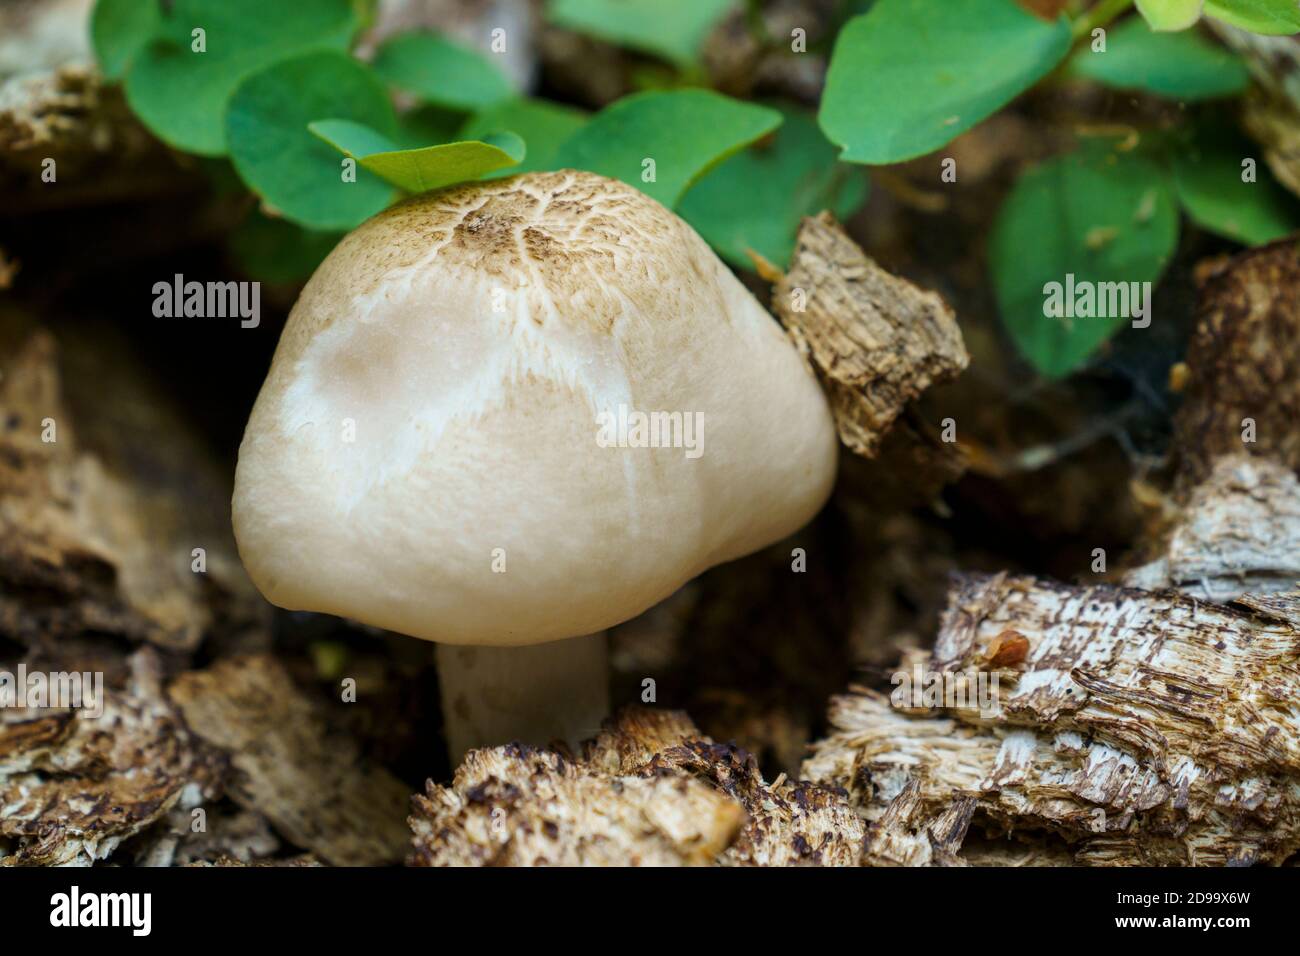 fungus mushroom growing on rotting tree,heise county park, san diego ca us Stock Photo